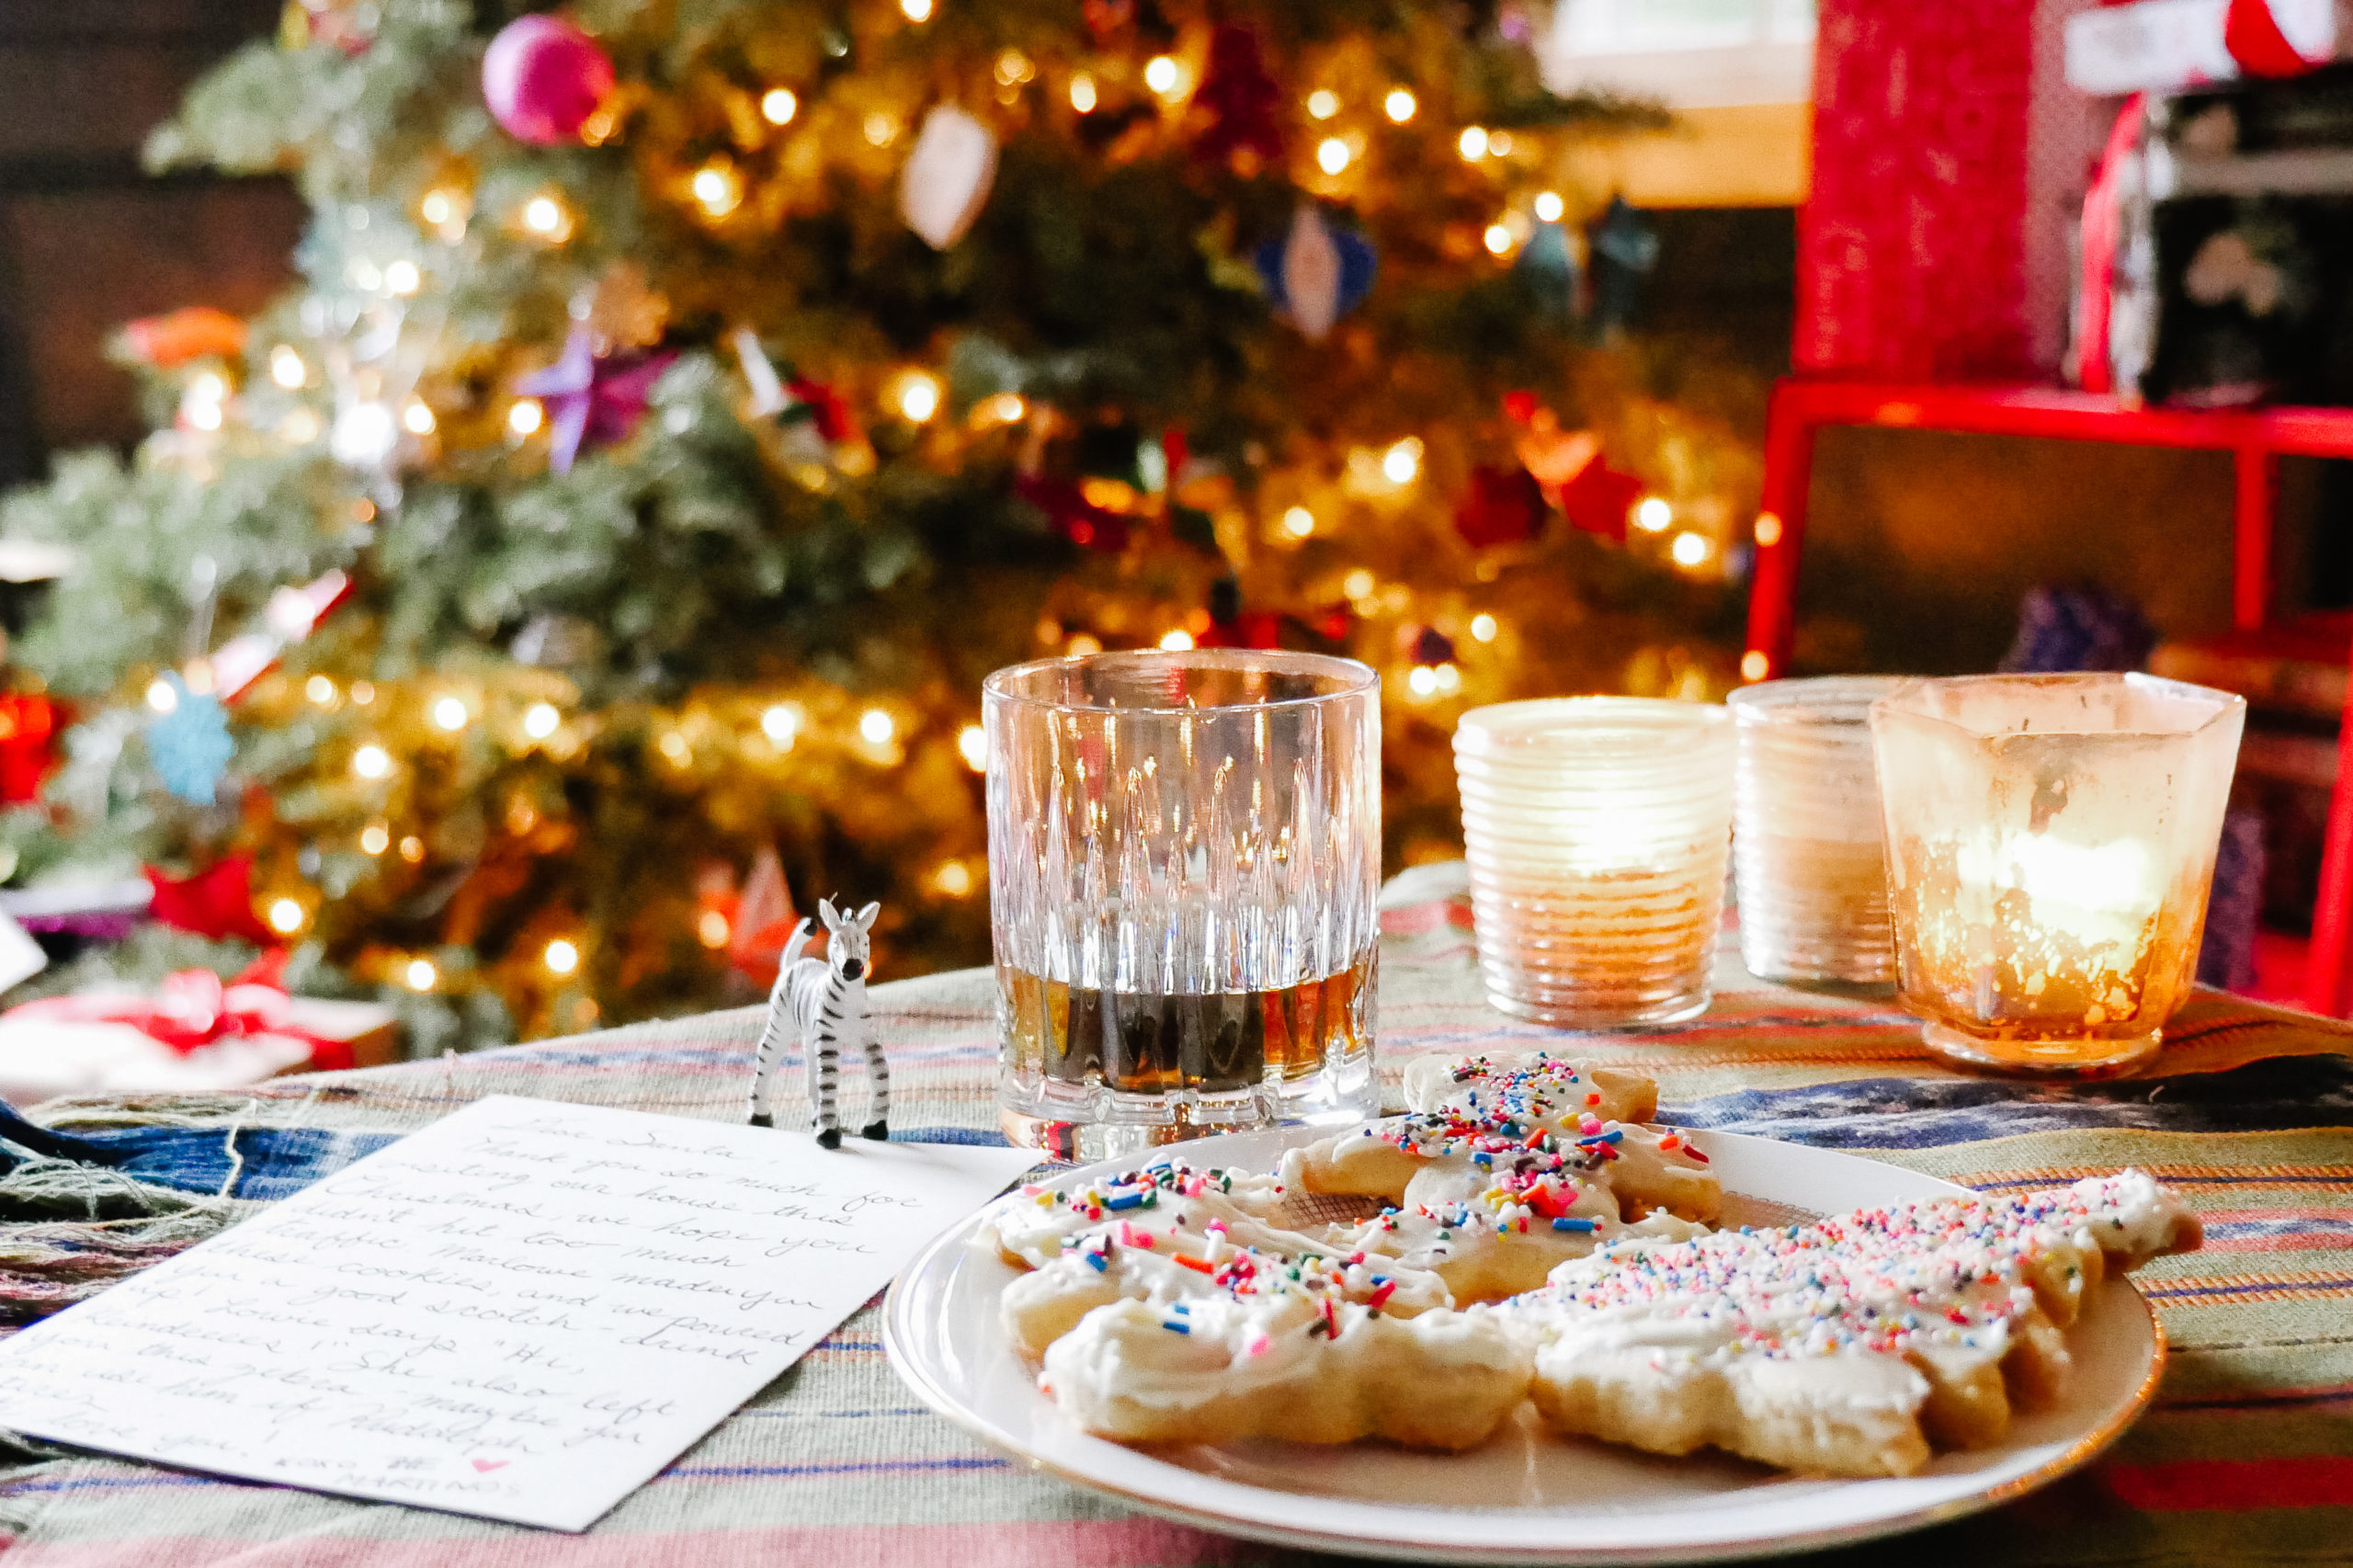 Eva Amurri shares what Christmas Eve treats she makes for Santa